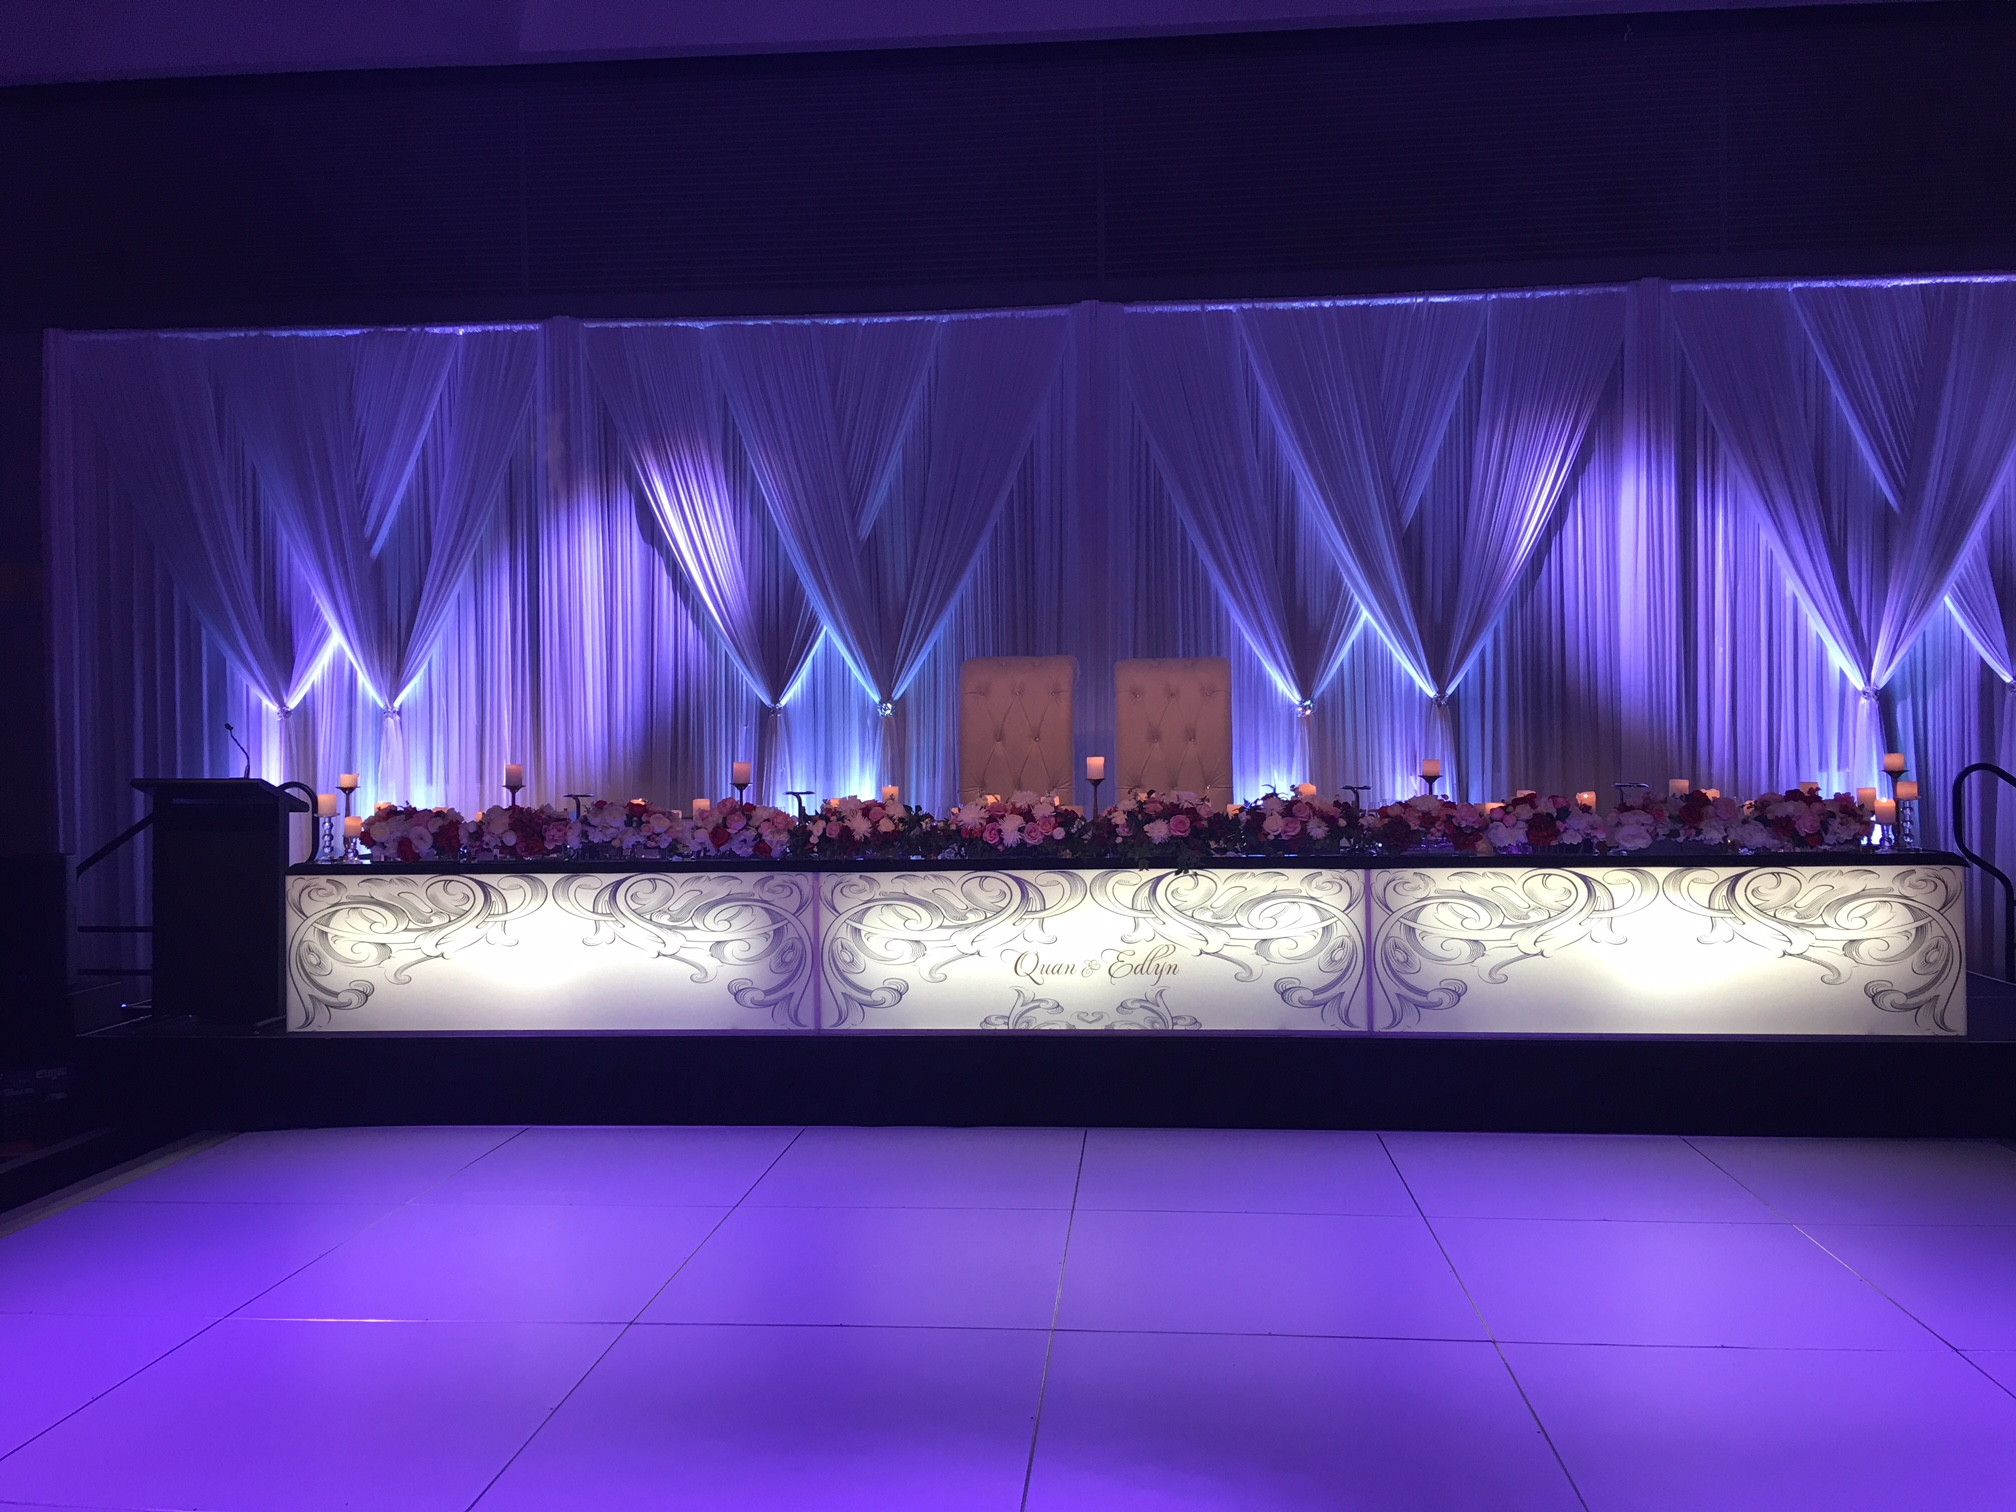 Hana & seb – wedding lakeview ballroom-joondallup resort